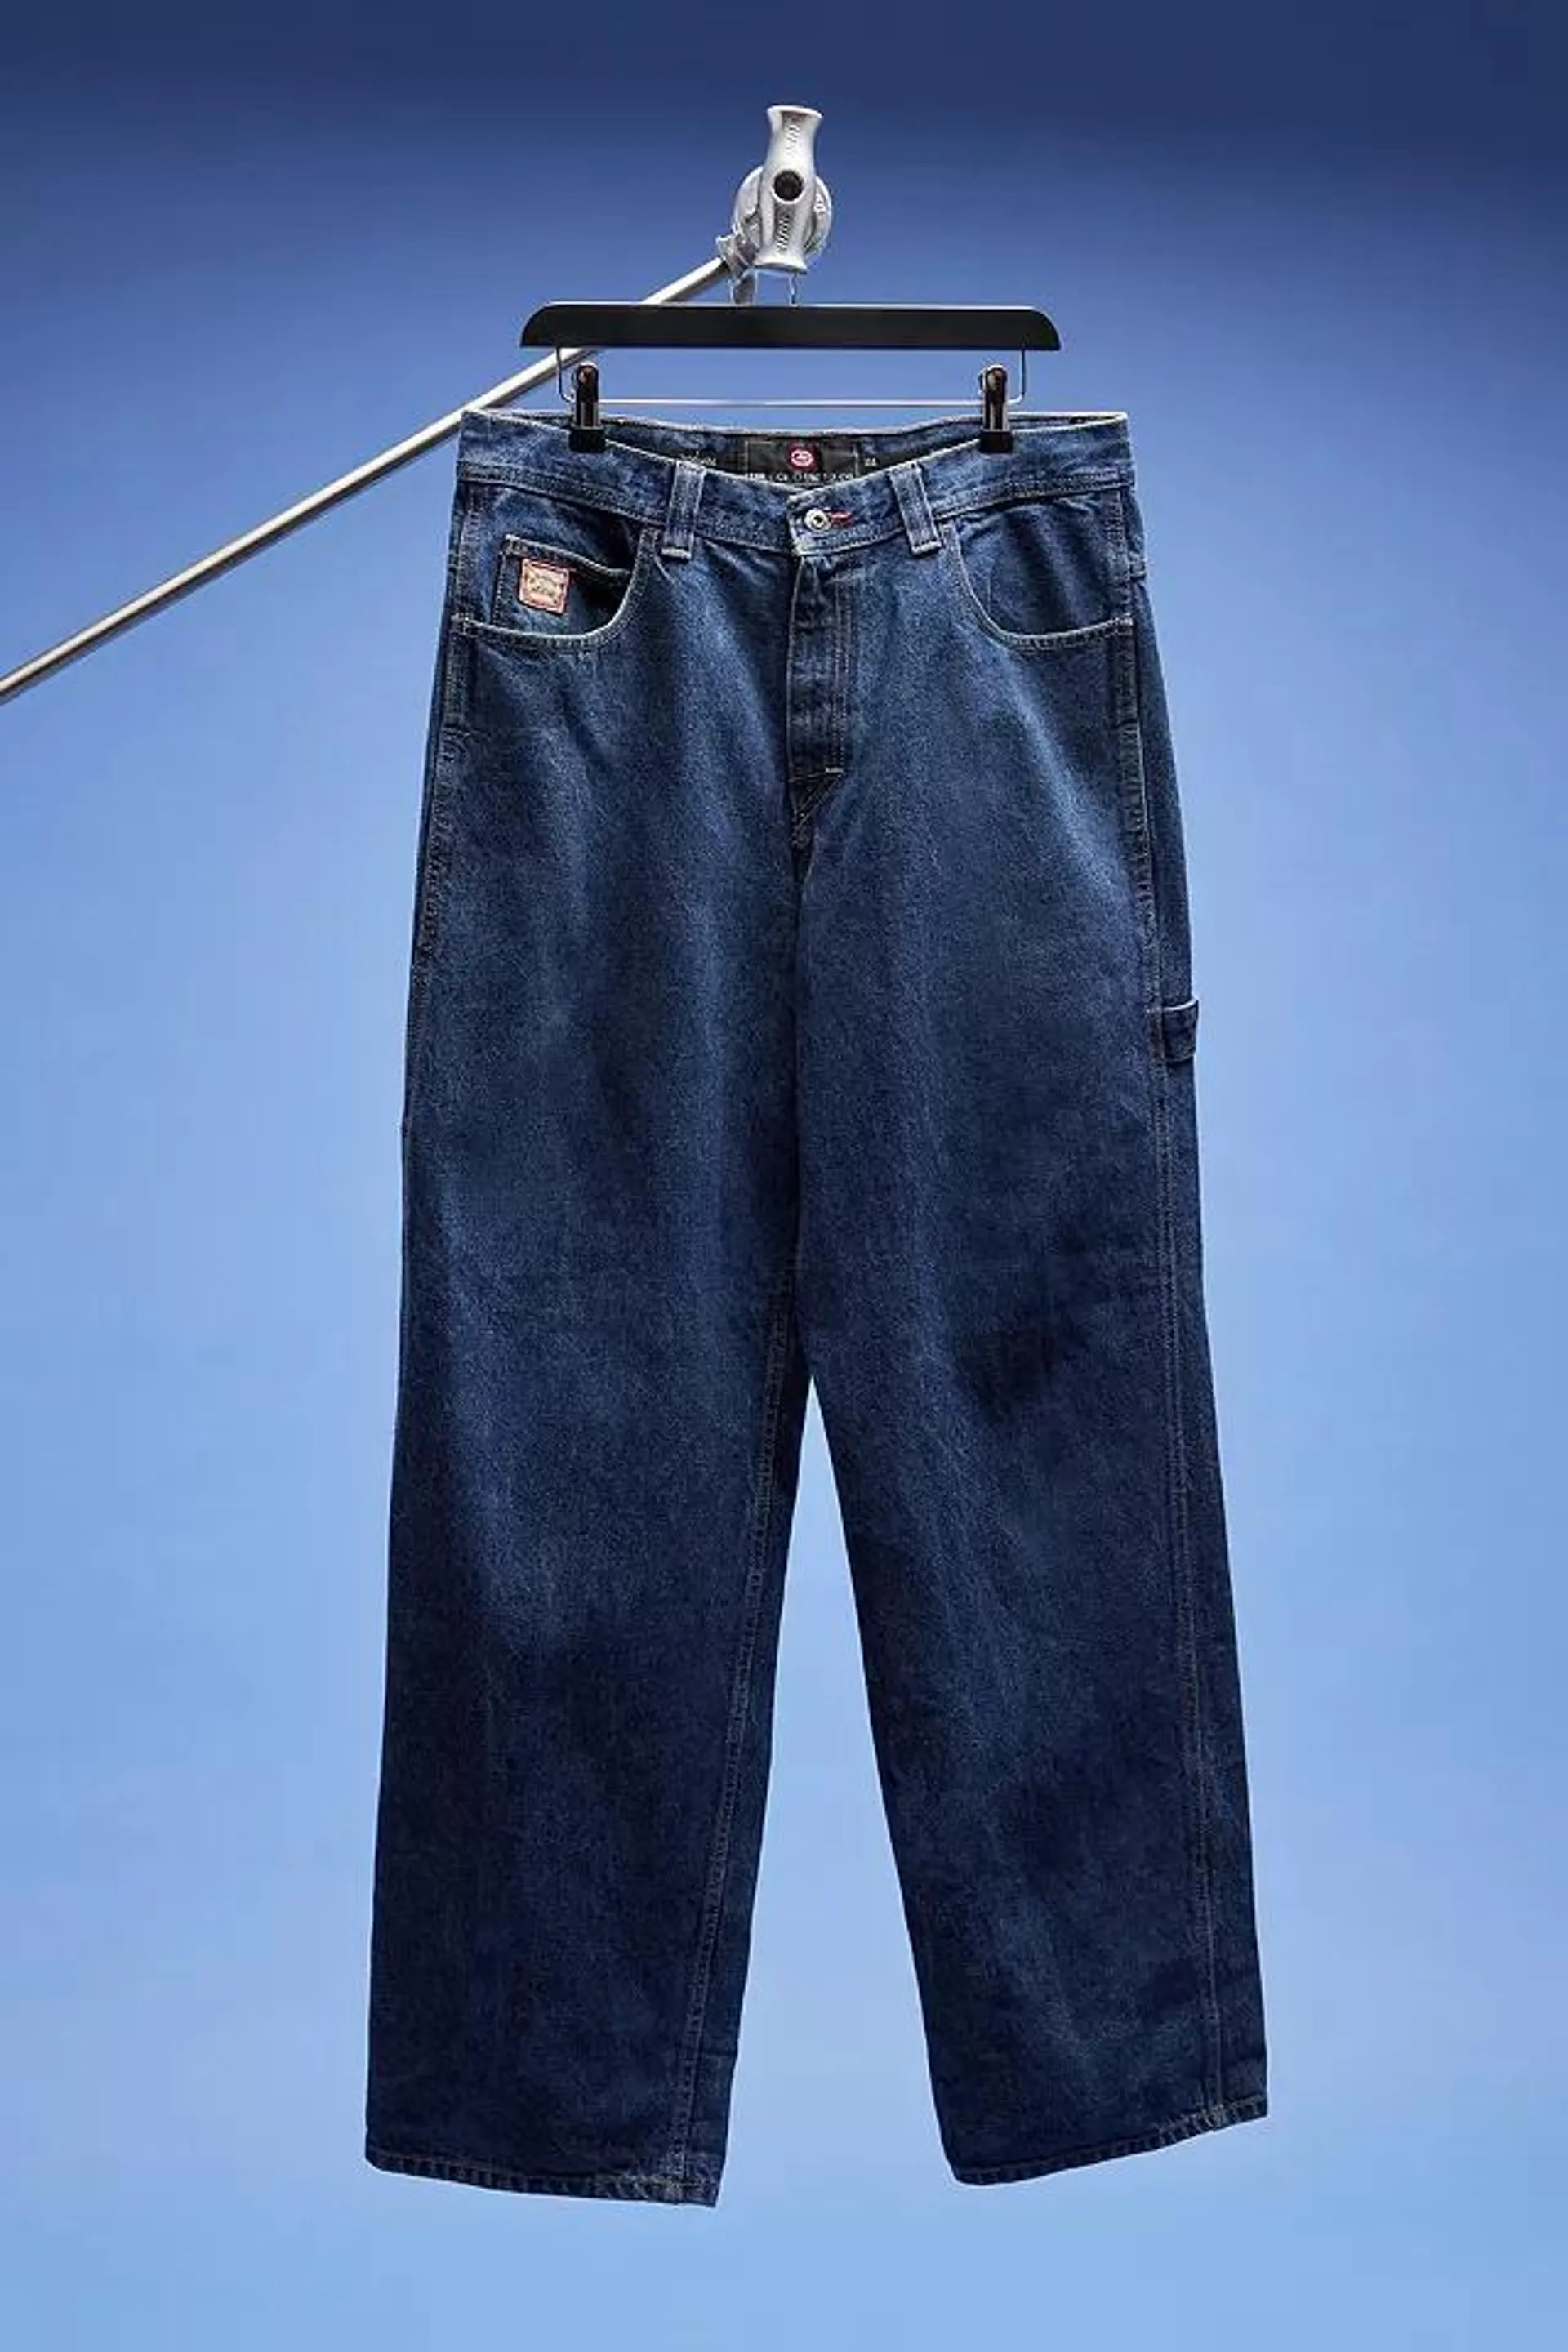 Urban Renewal One-Of-A-Kind Ecko Unltd. Carpenter Jeans